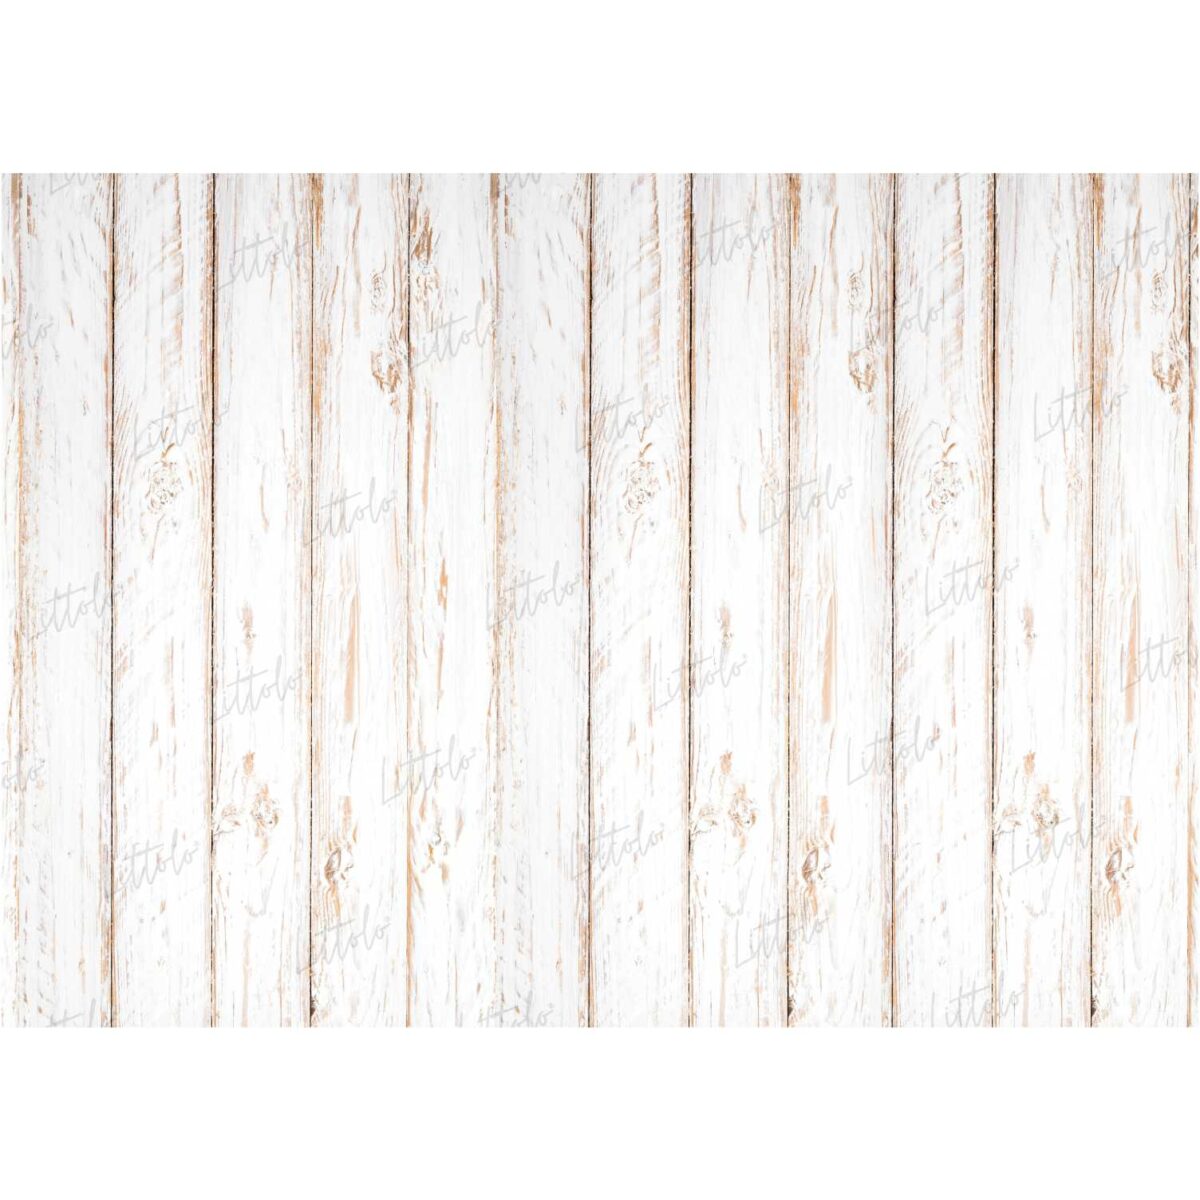 LB0002 White Rustic Planks Backdrop